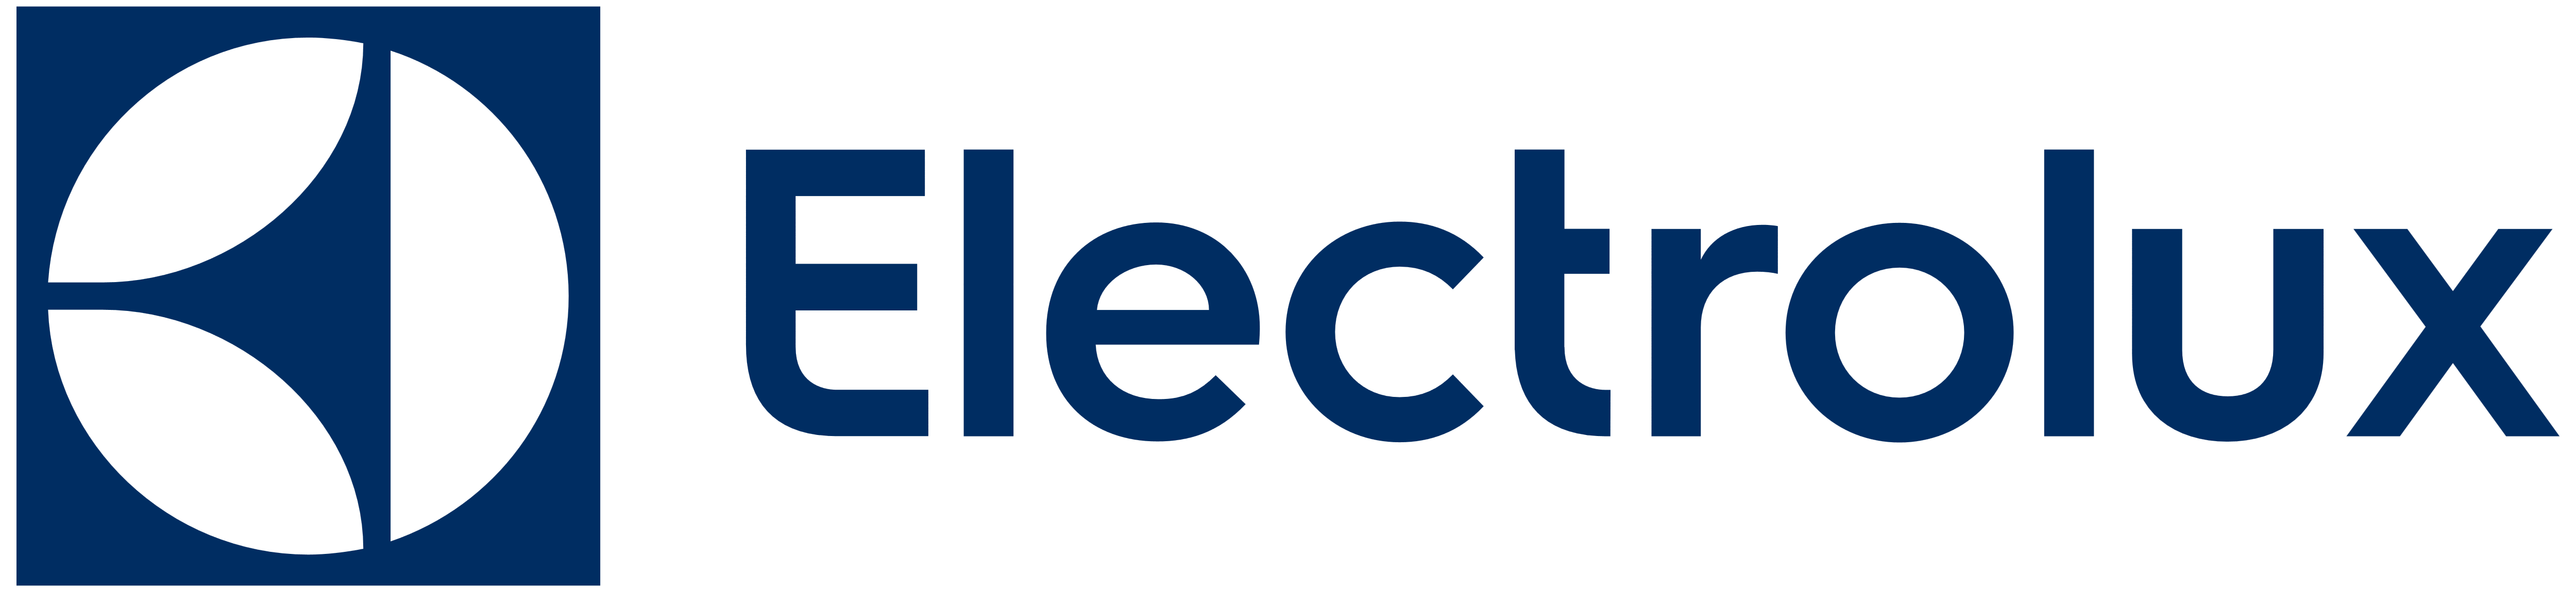 Electrolux Logo Images, Elect